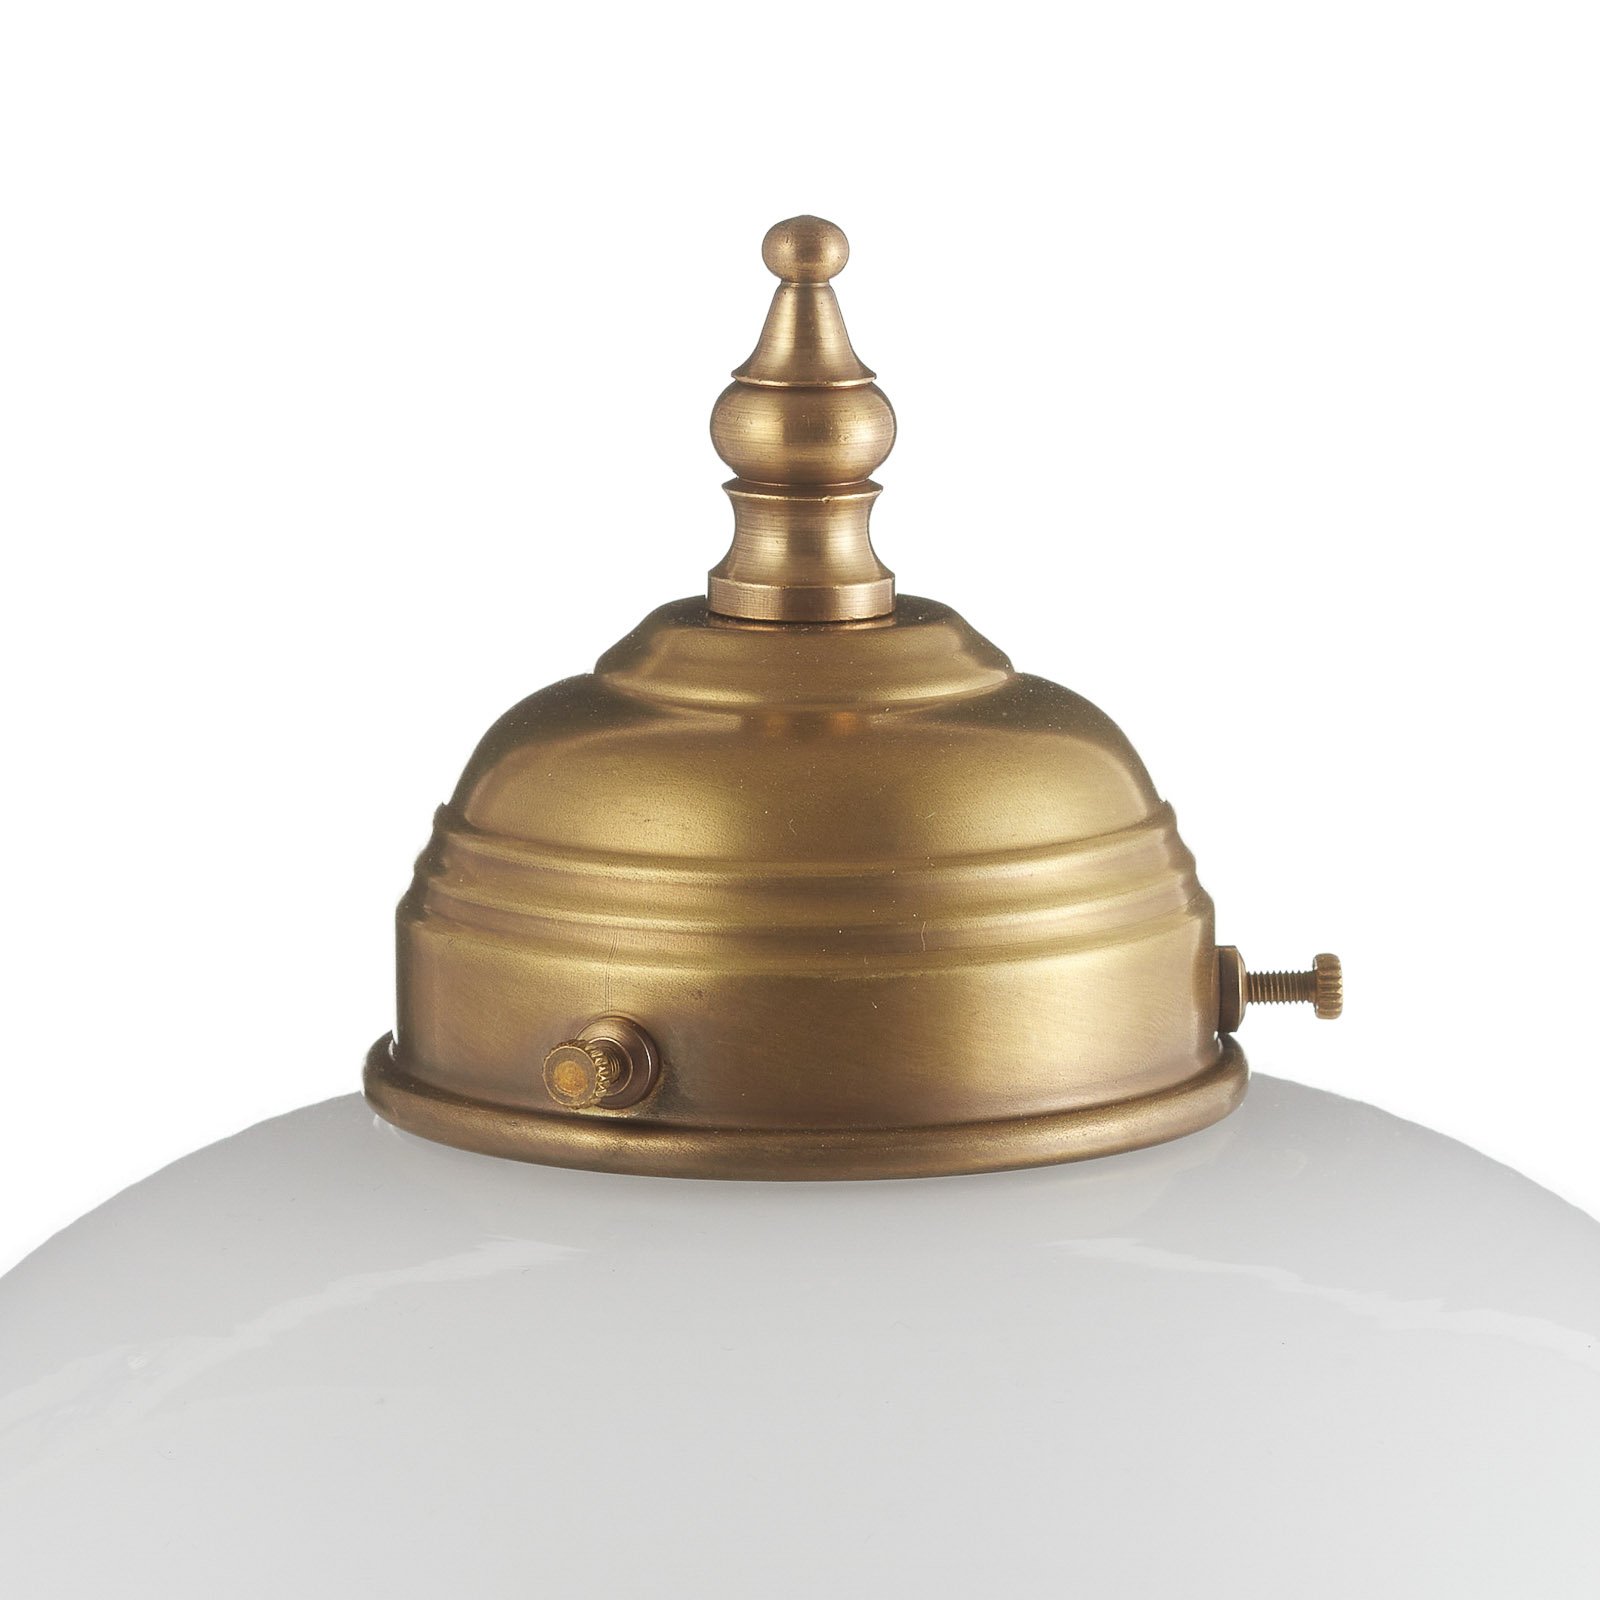 Carolin embellished table lamp made of brass